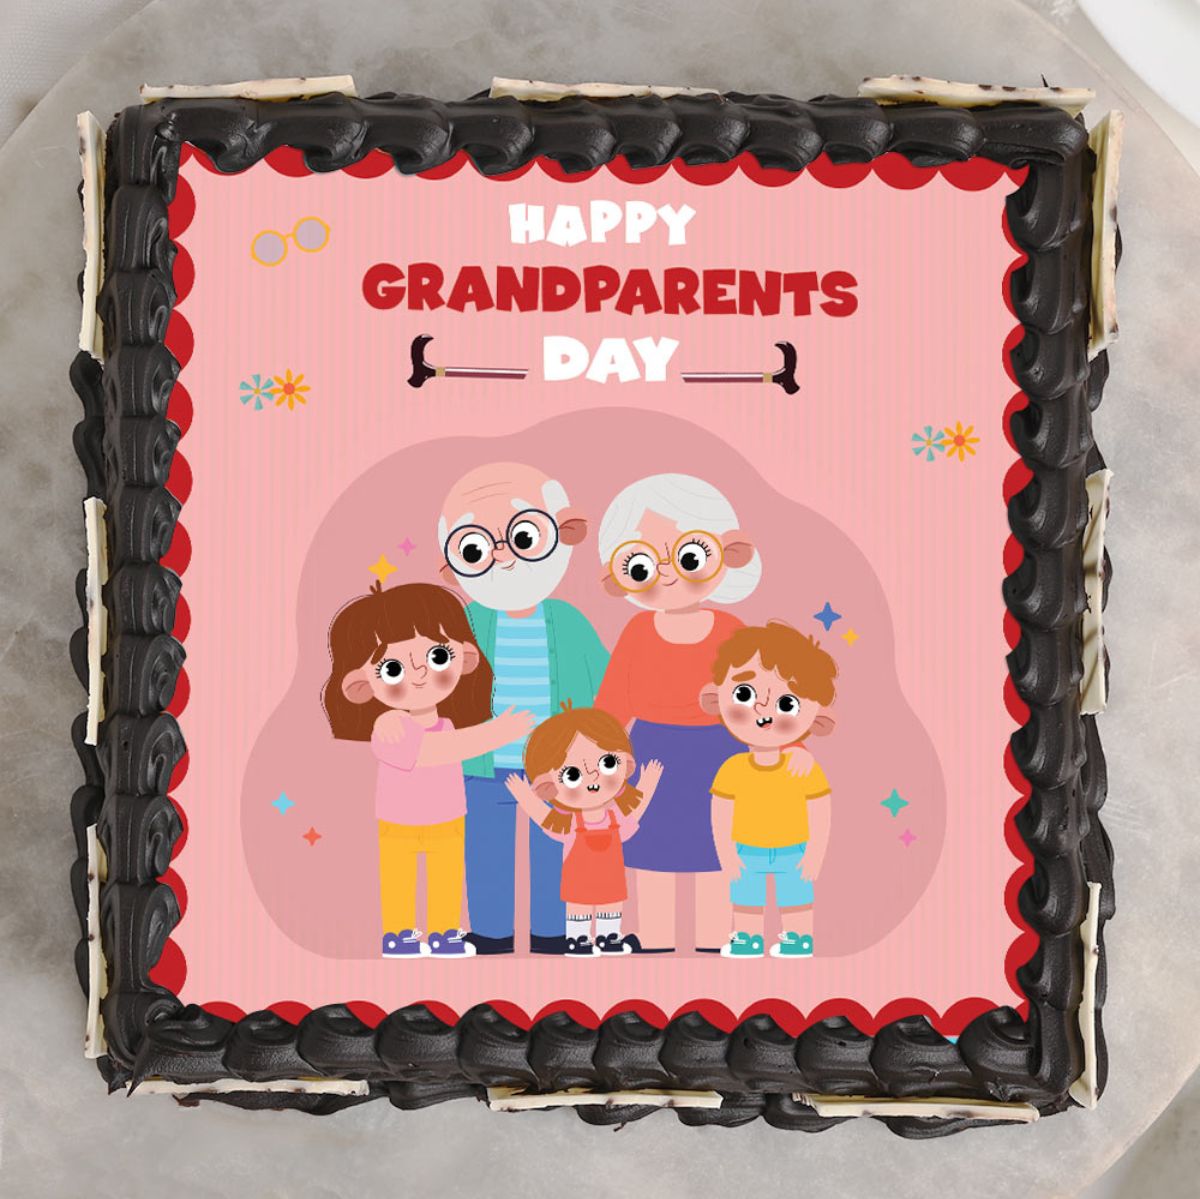 Happy Grandparents Day Photo Cake